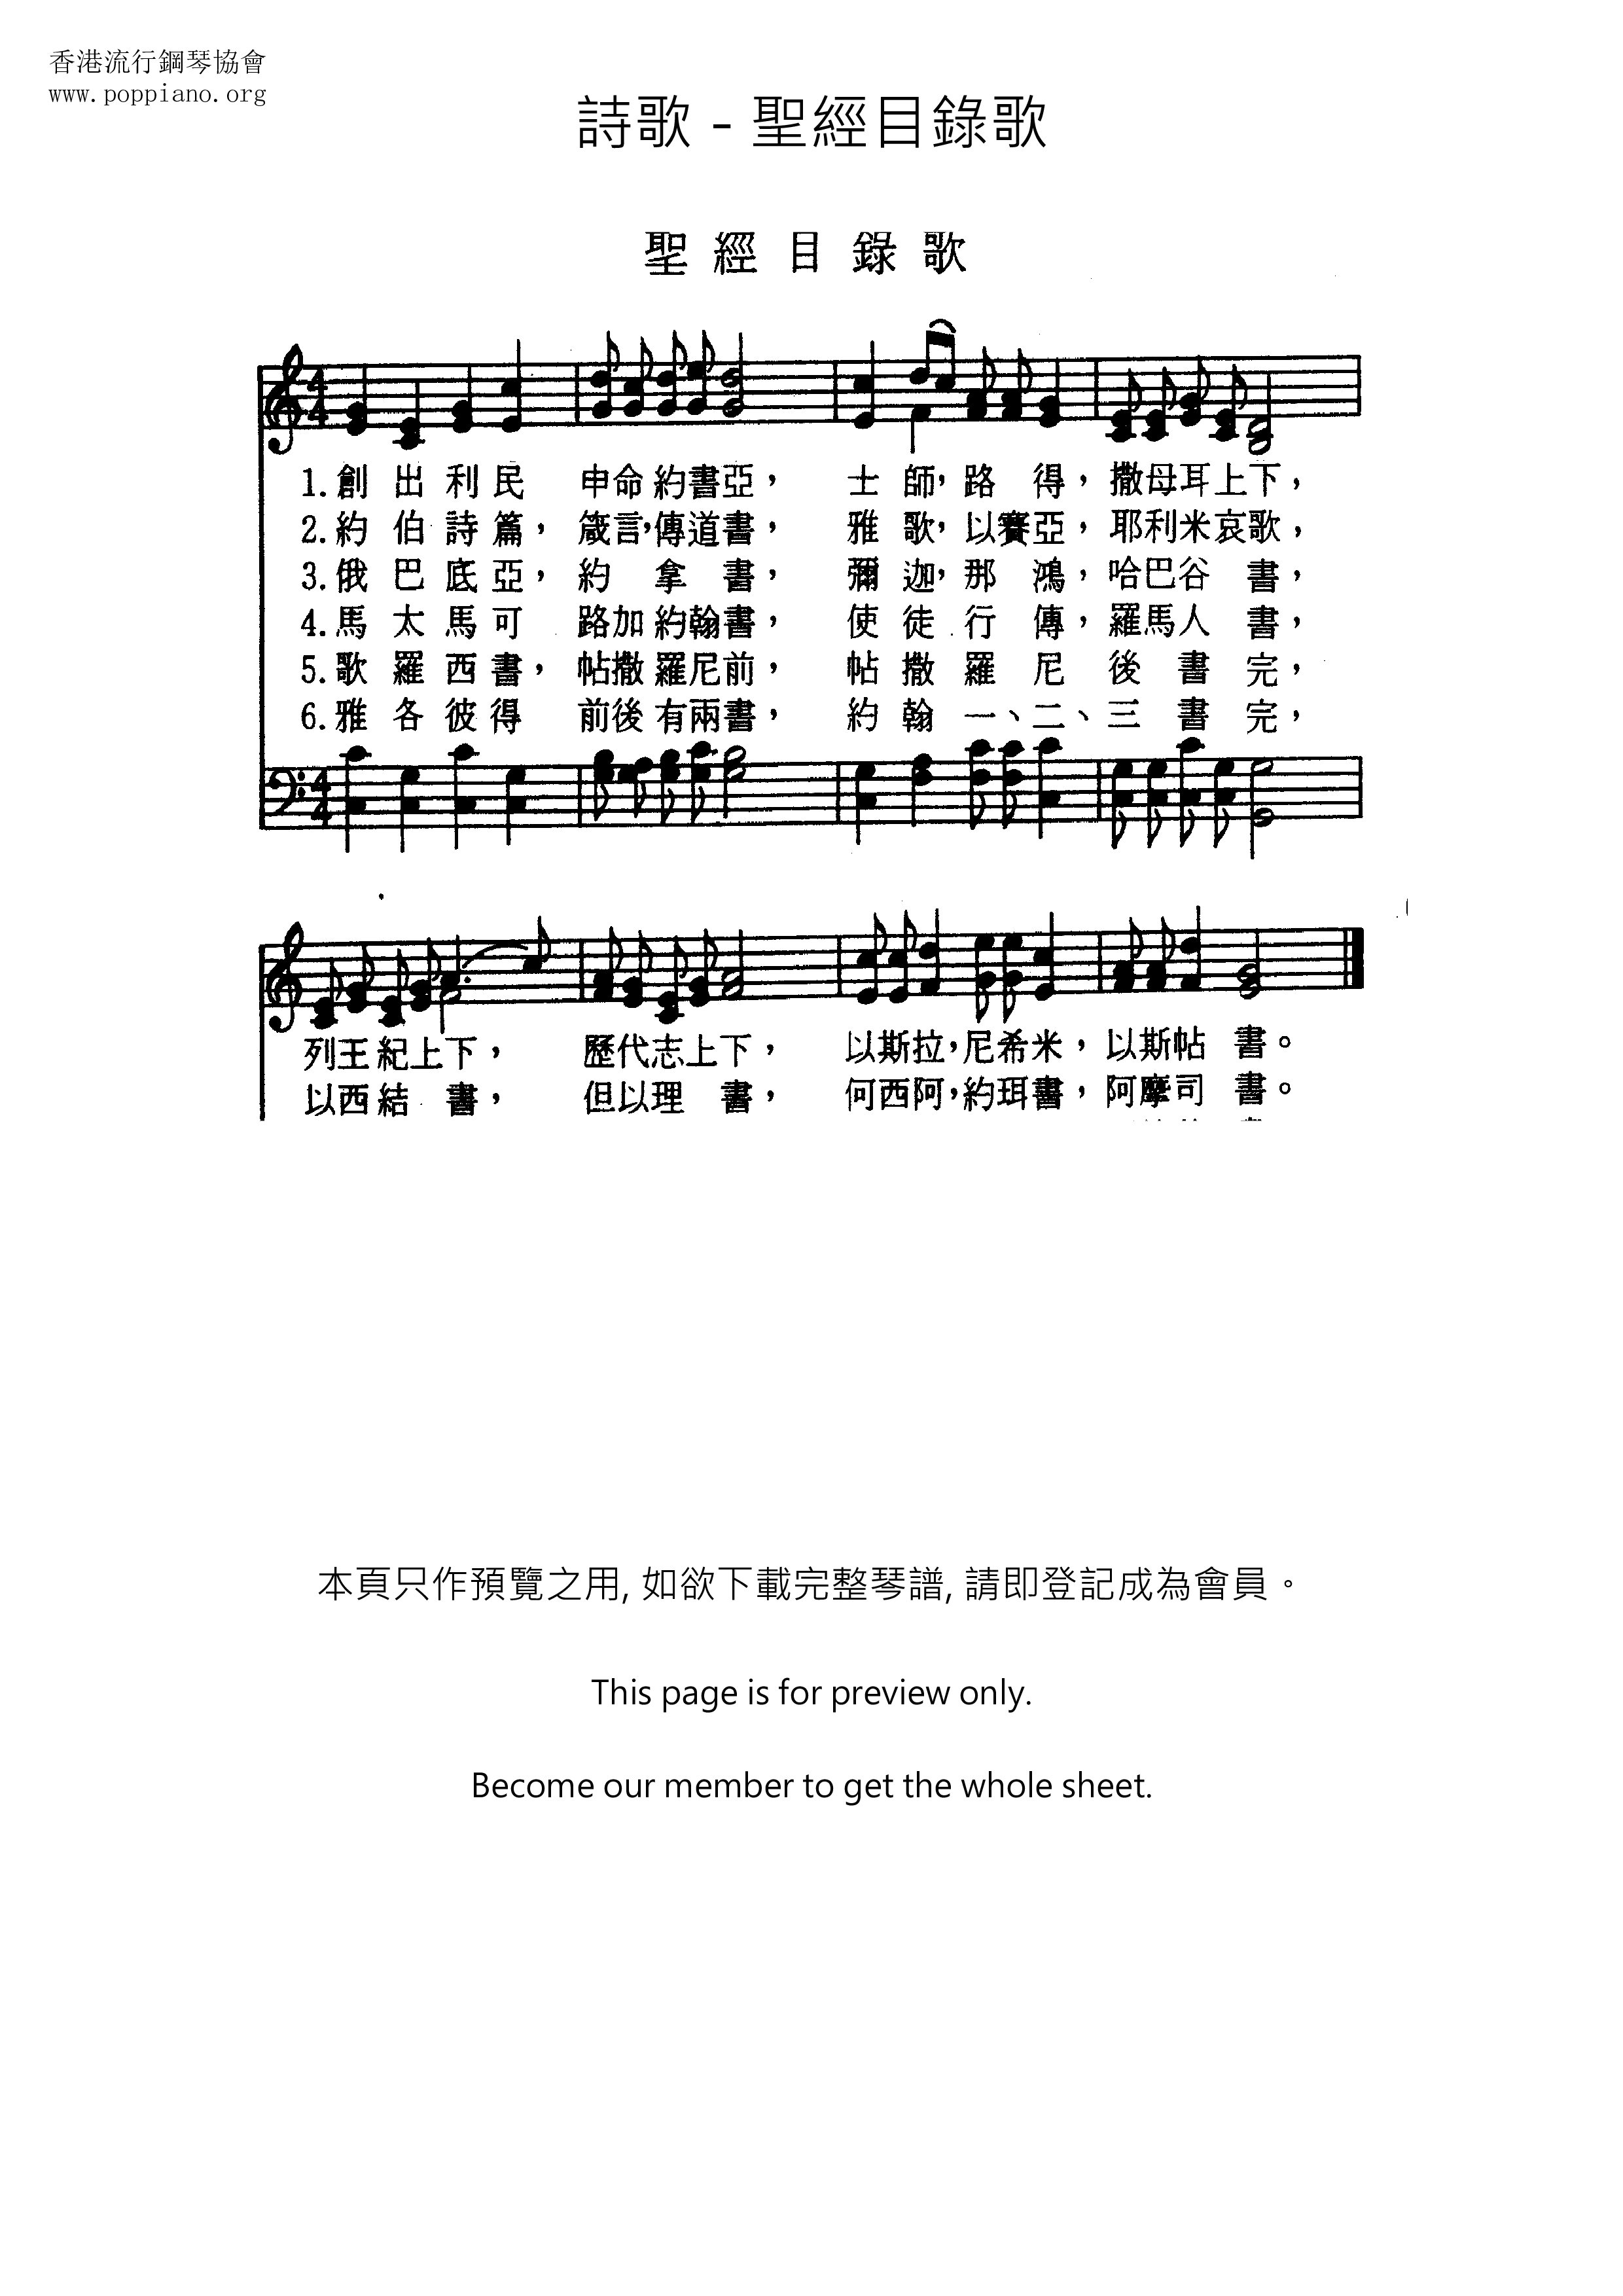 The Bible Catalogue Song Score